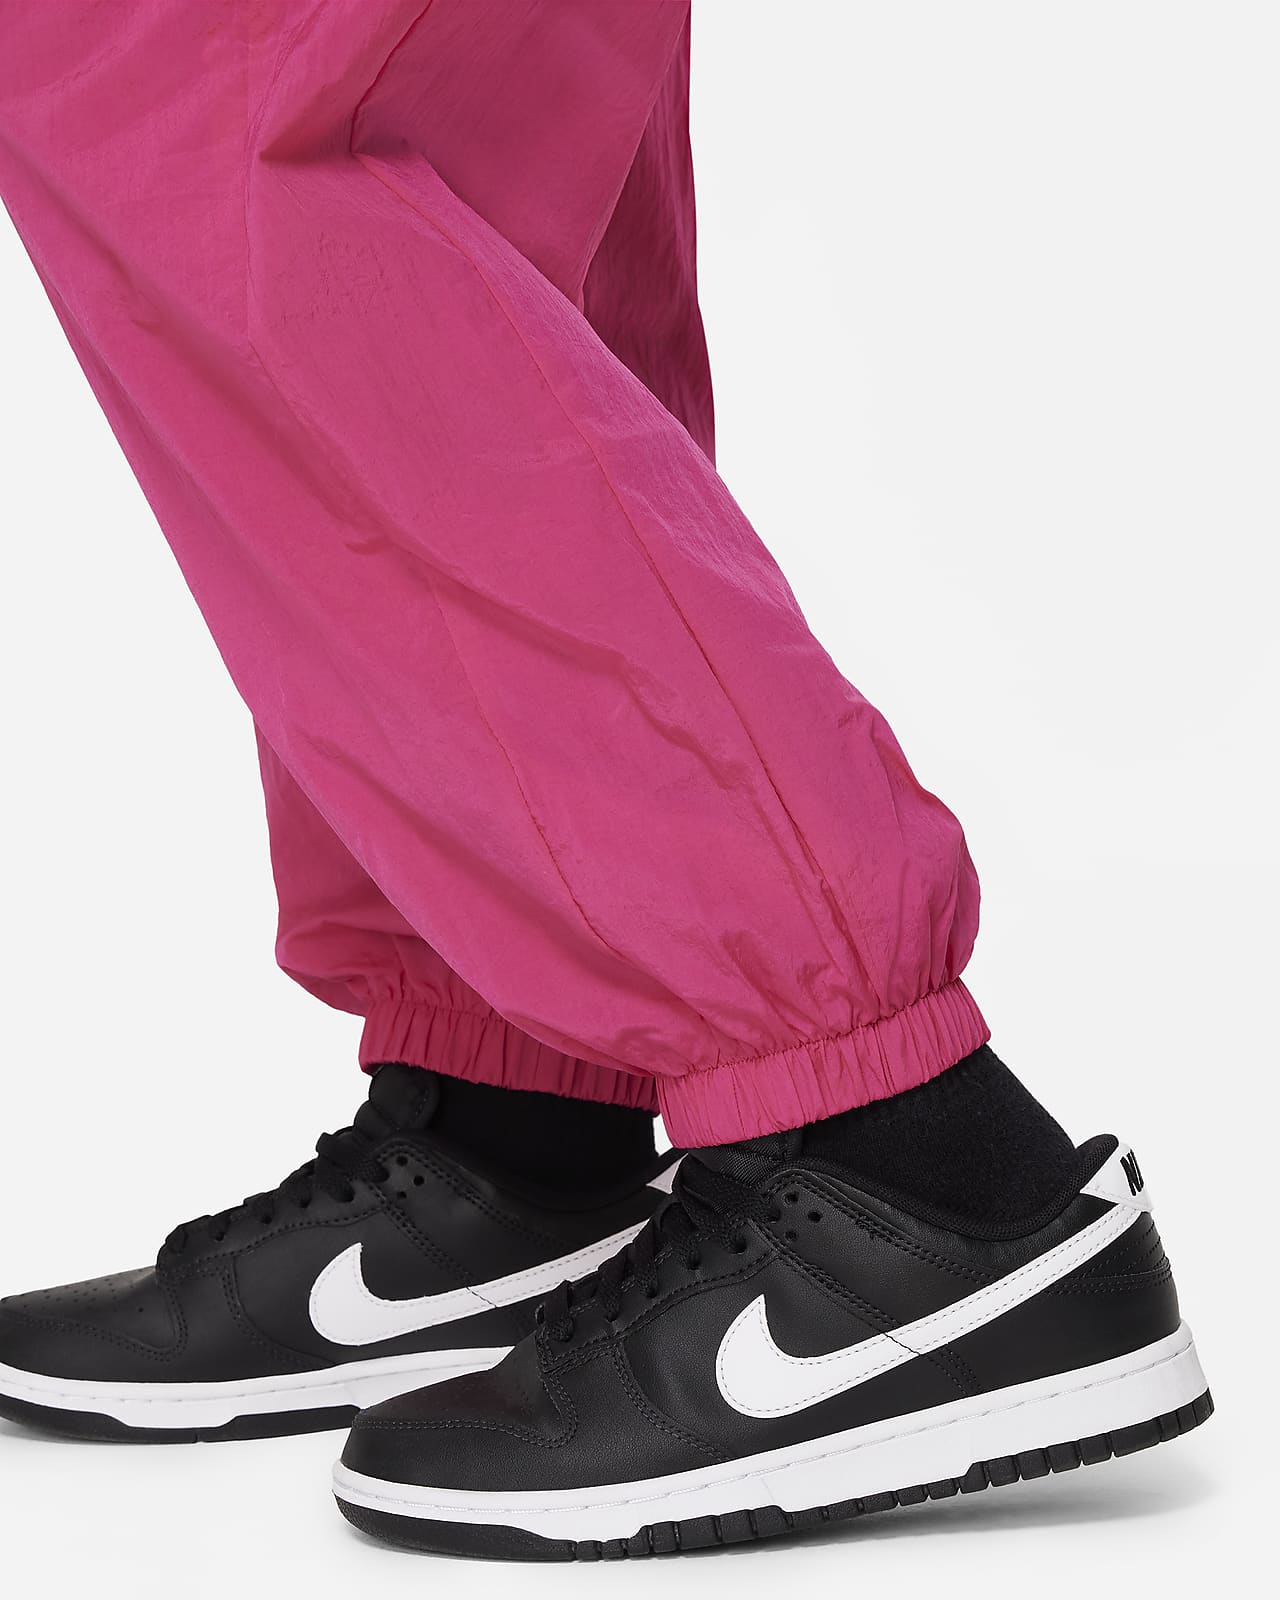 Nike Sportswear Air Track Satin Pants Black